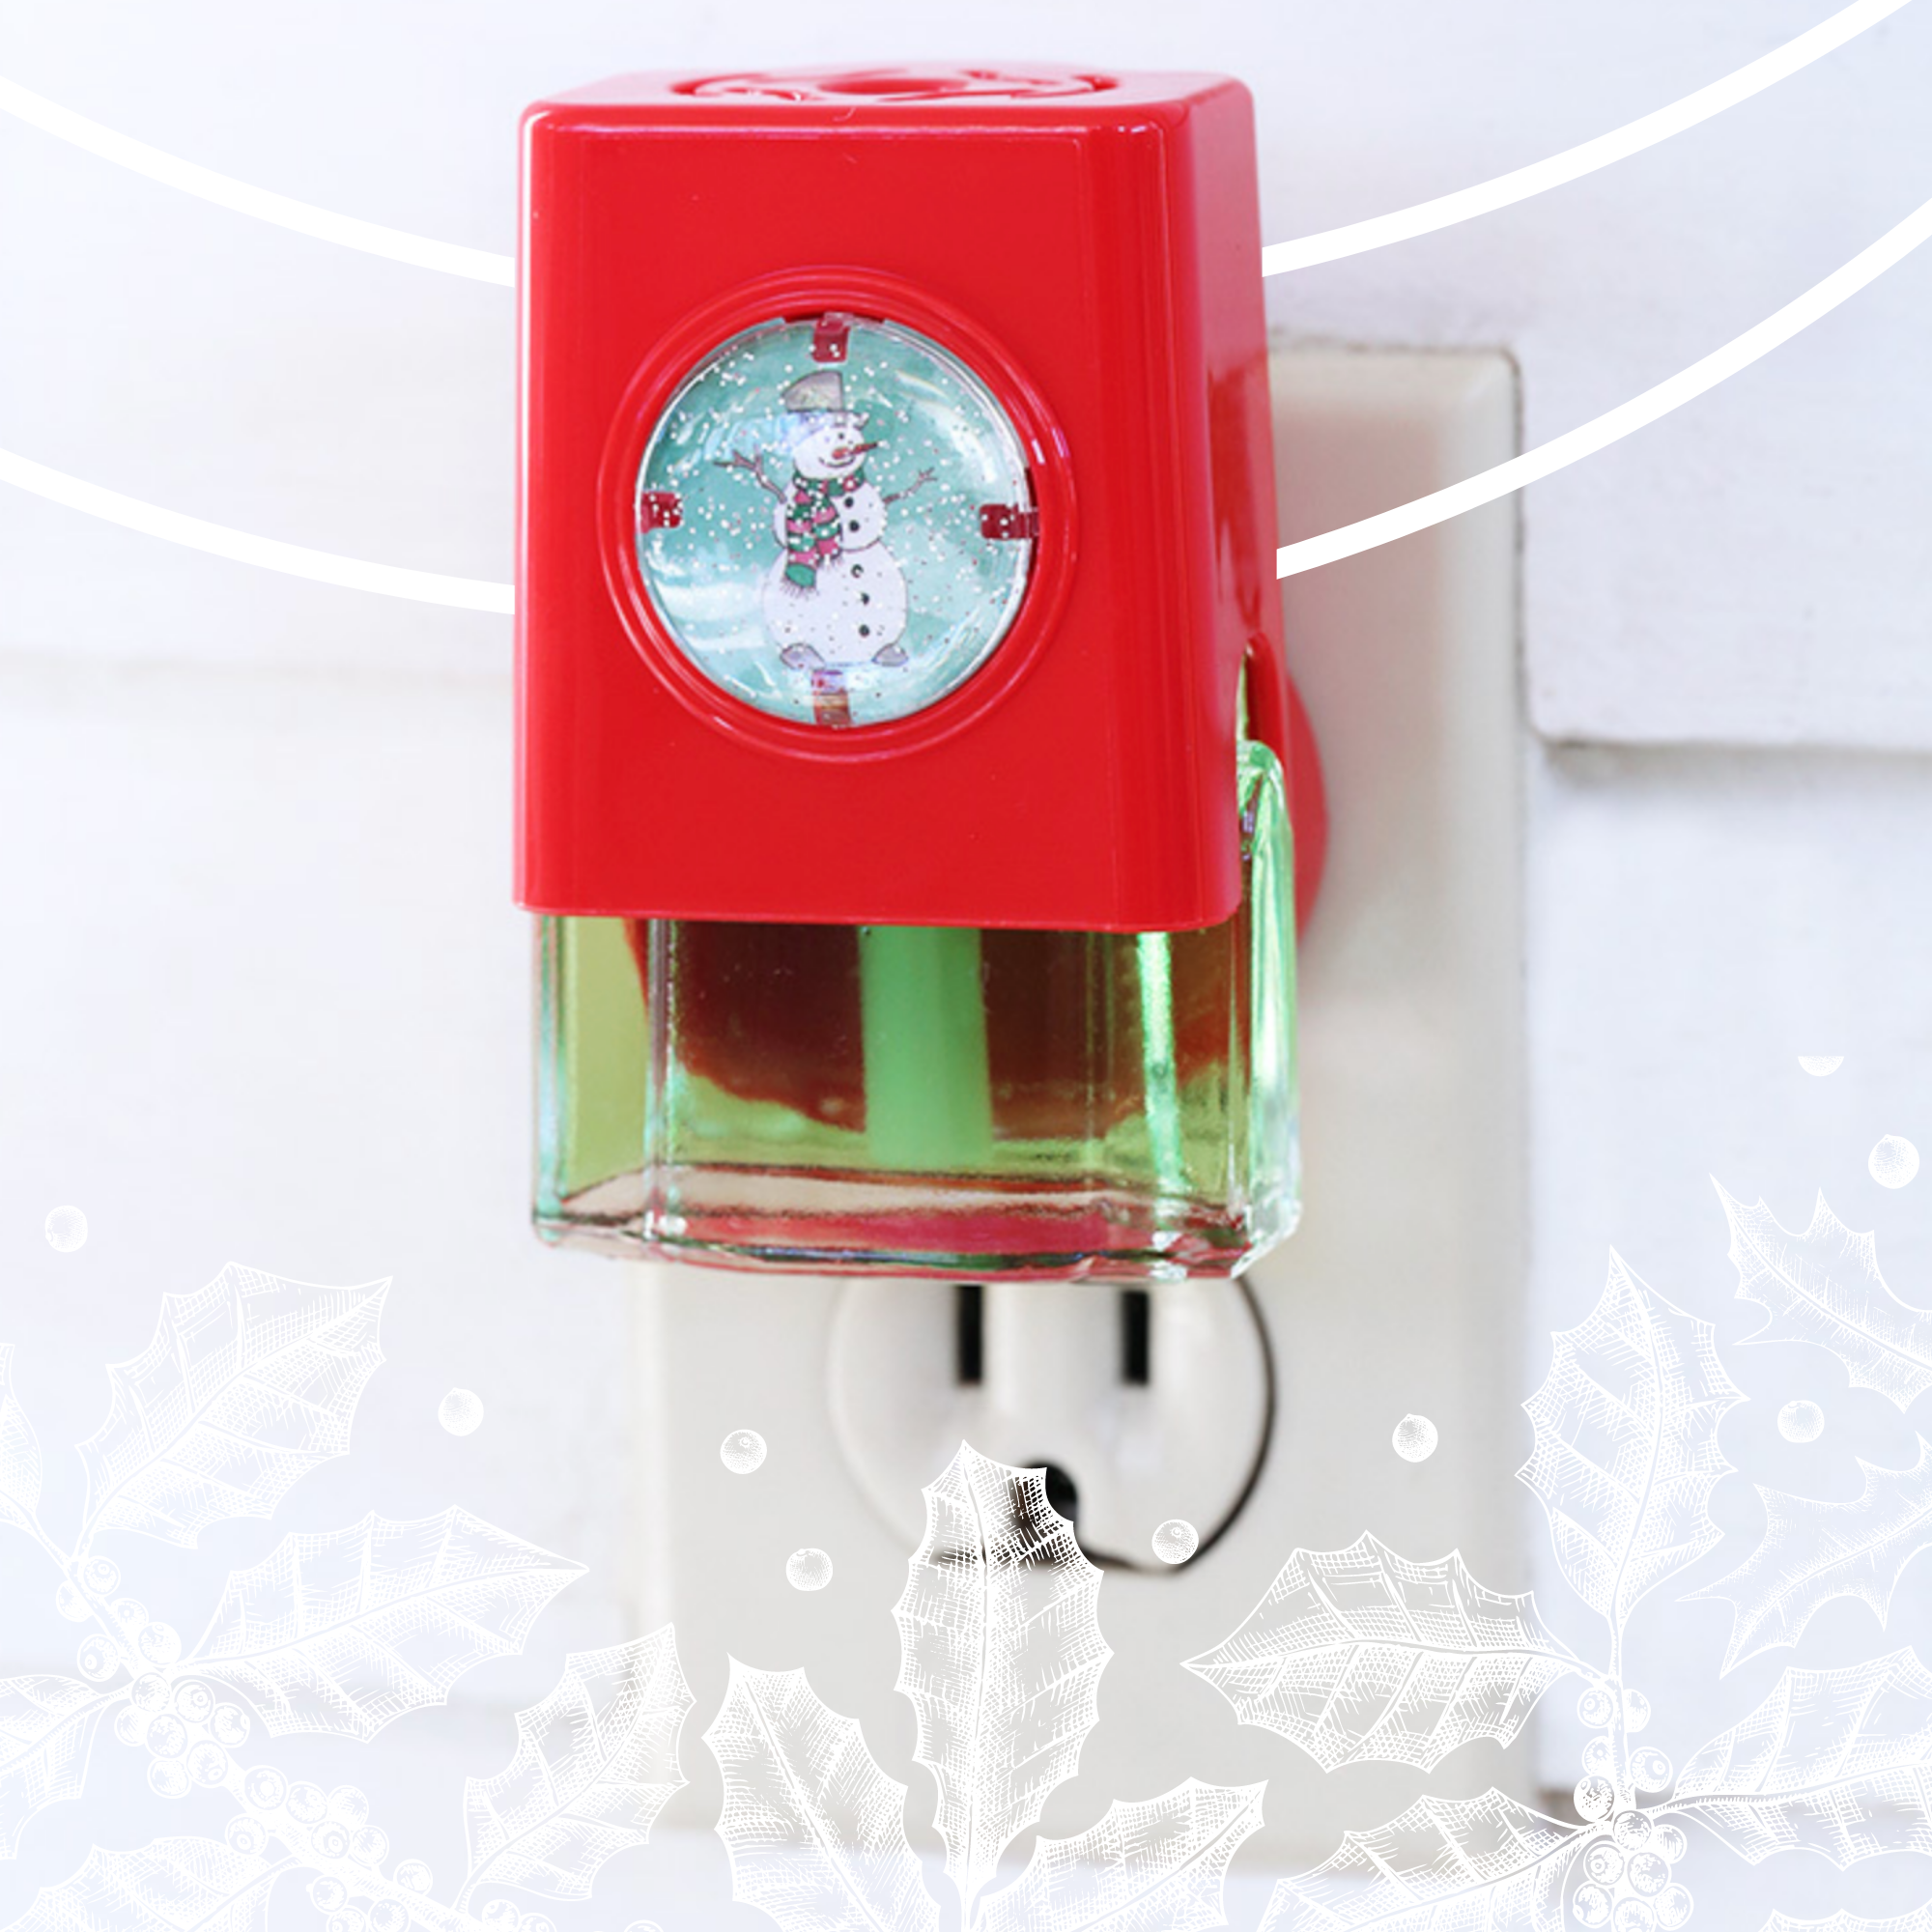 Glitter Domes™ Plugables® Aromalectric® Scented Oil Diffuser - Snowman  Home Fragrance Accessories